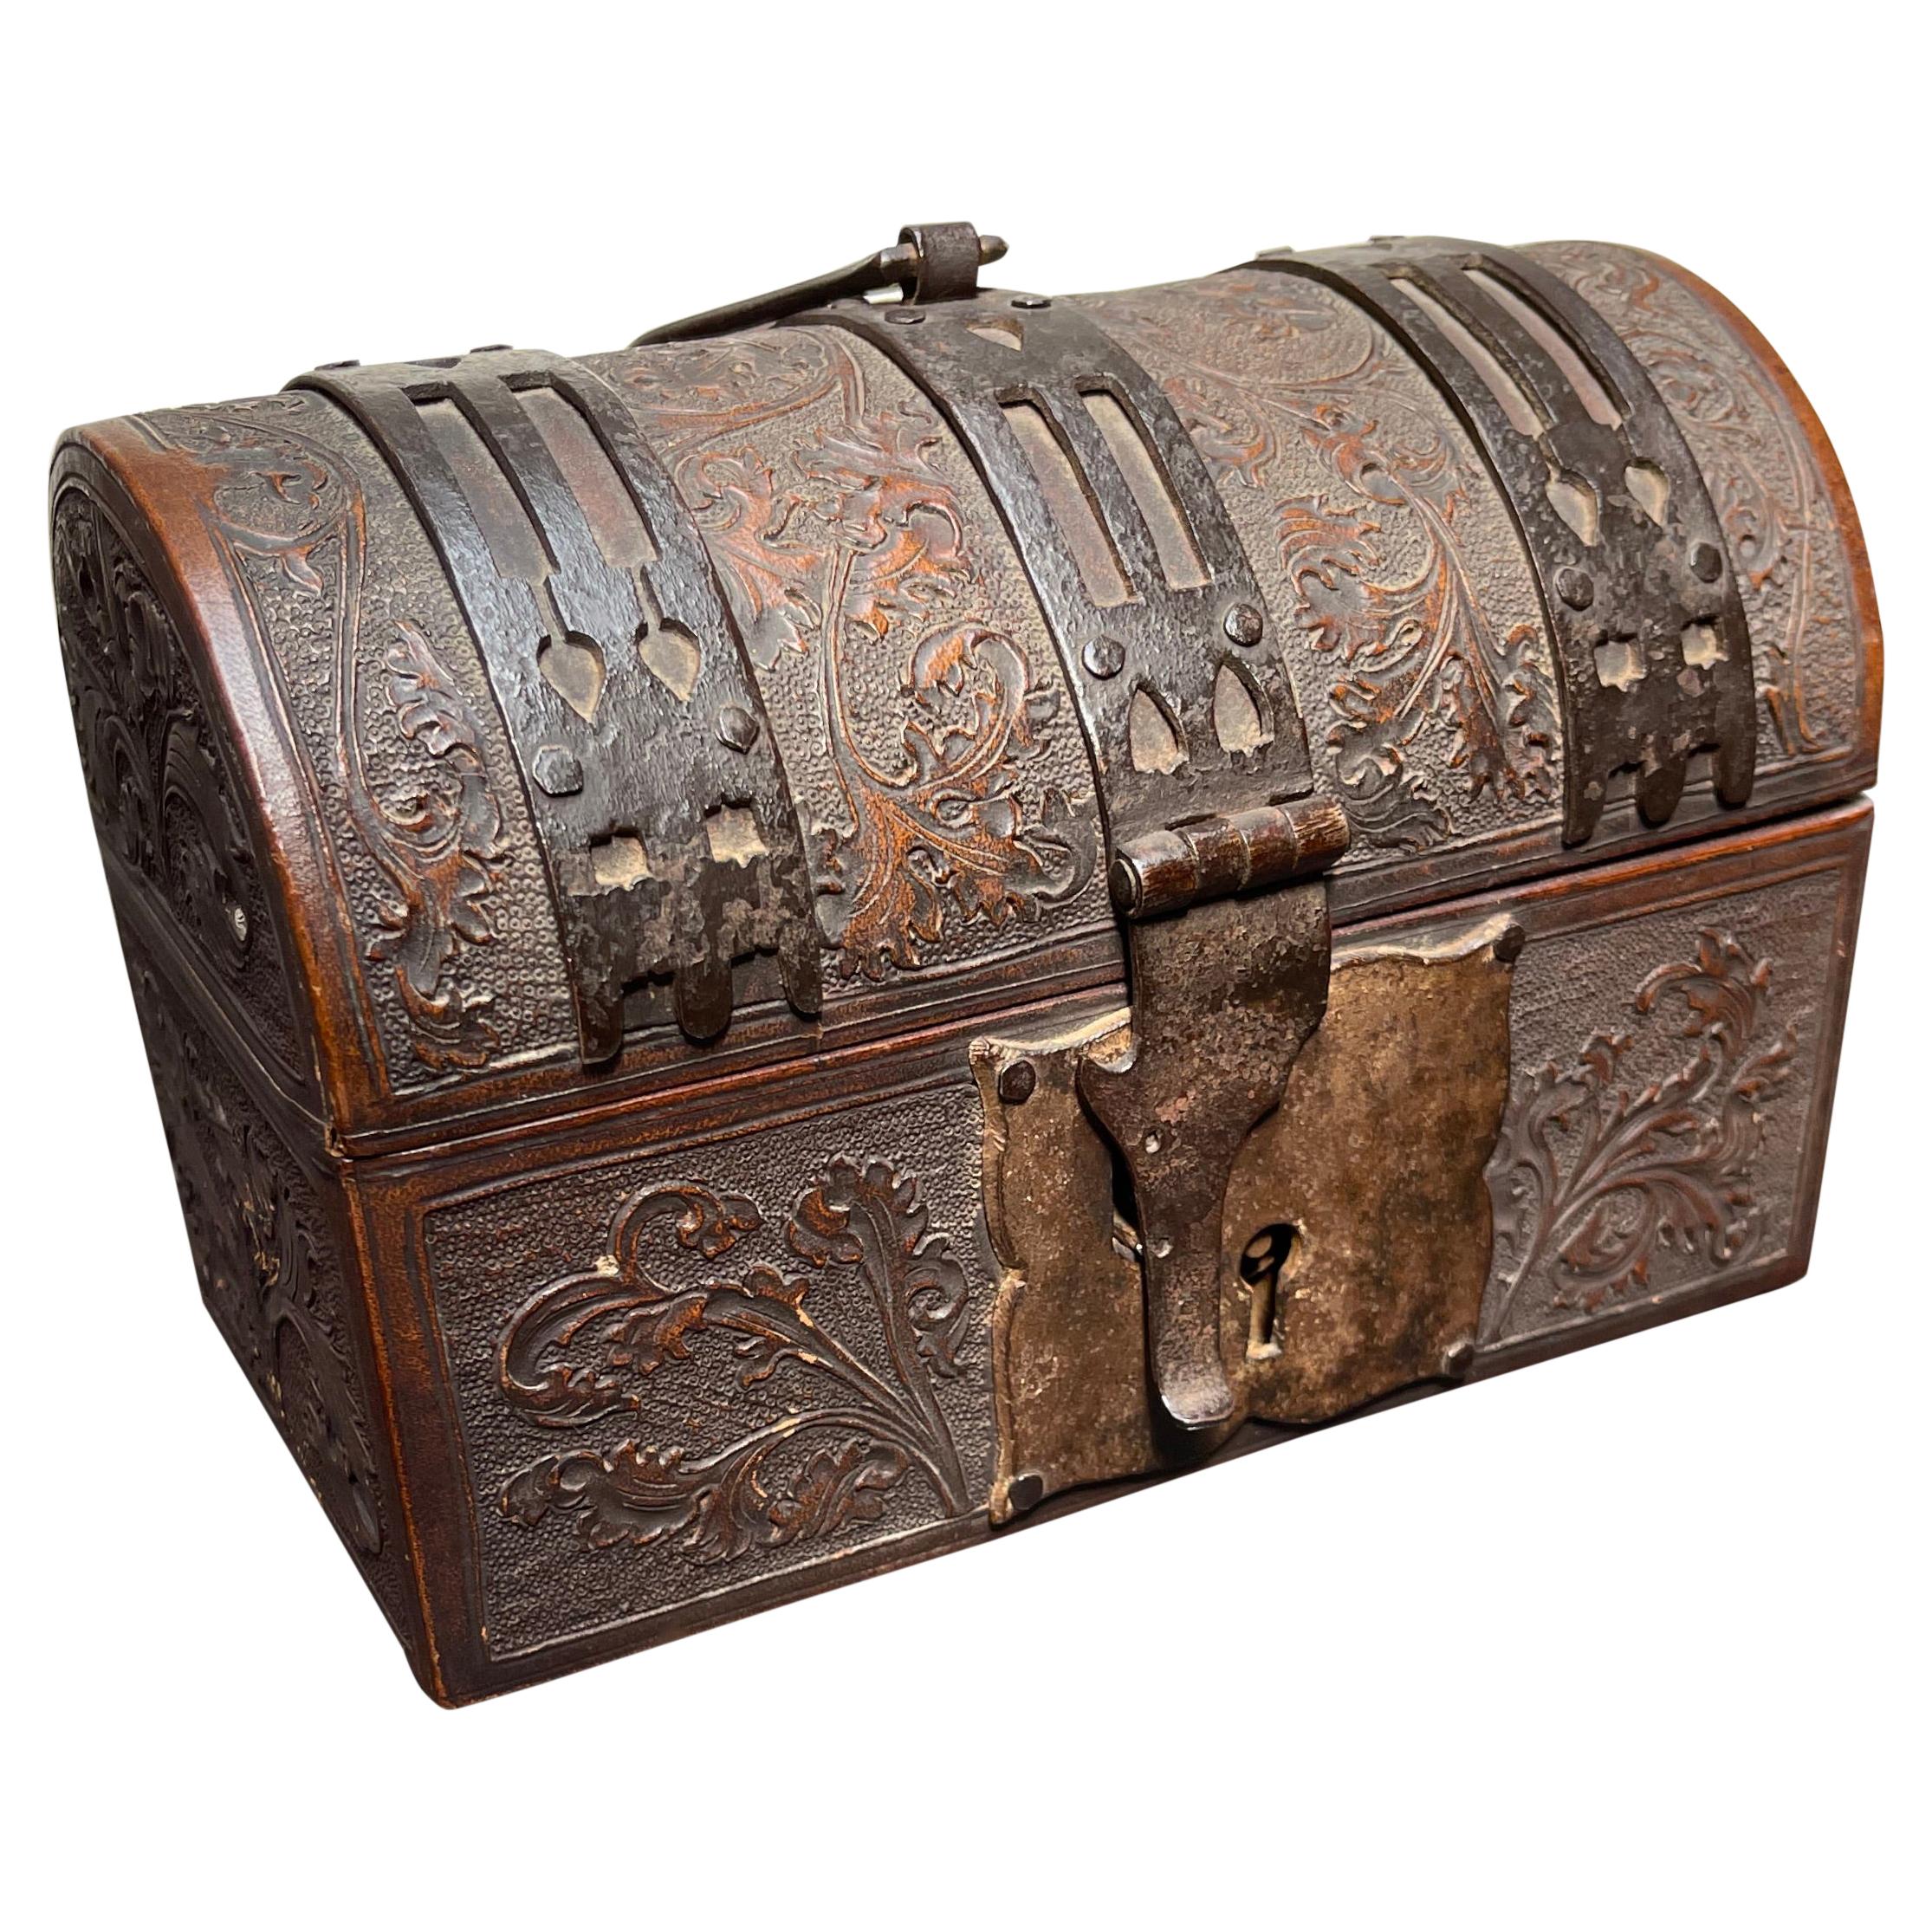 Stunning Renaissance Revival Nuptial Casket / Box, Great Patina, Lock and Key